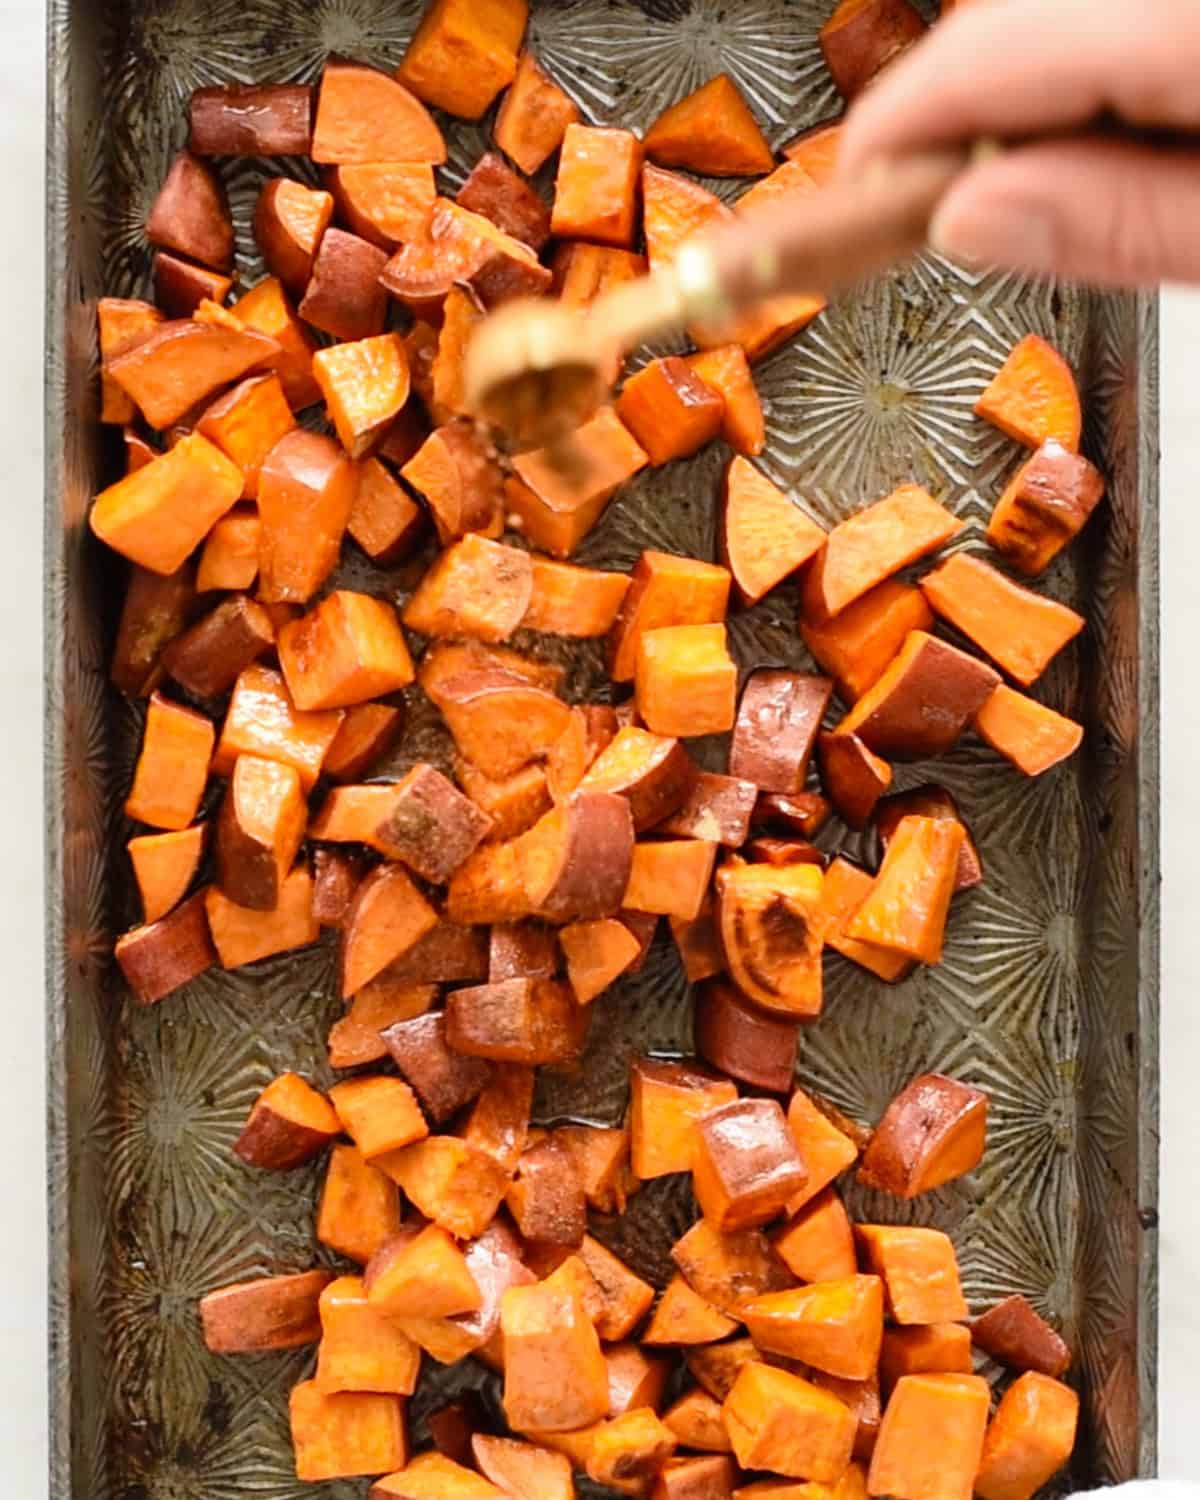 how to make Cinnamon Roasted Sweet Potatoes - adding cinnamon to to partially roasted sweet potatoes